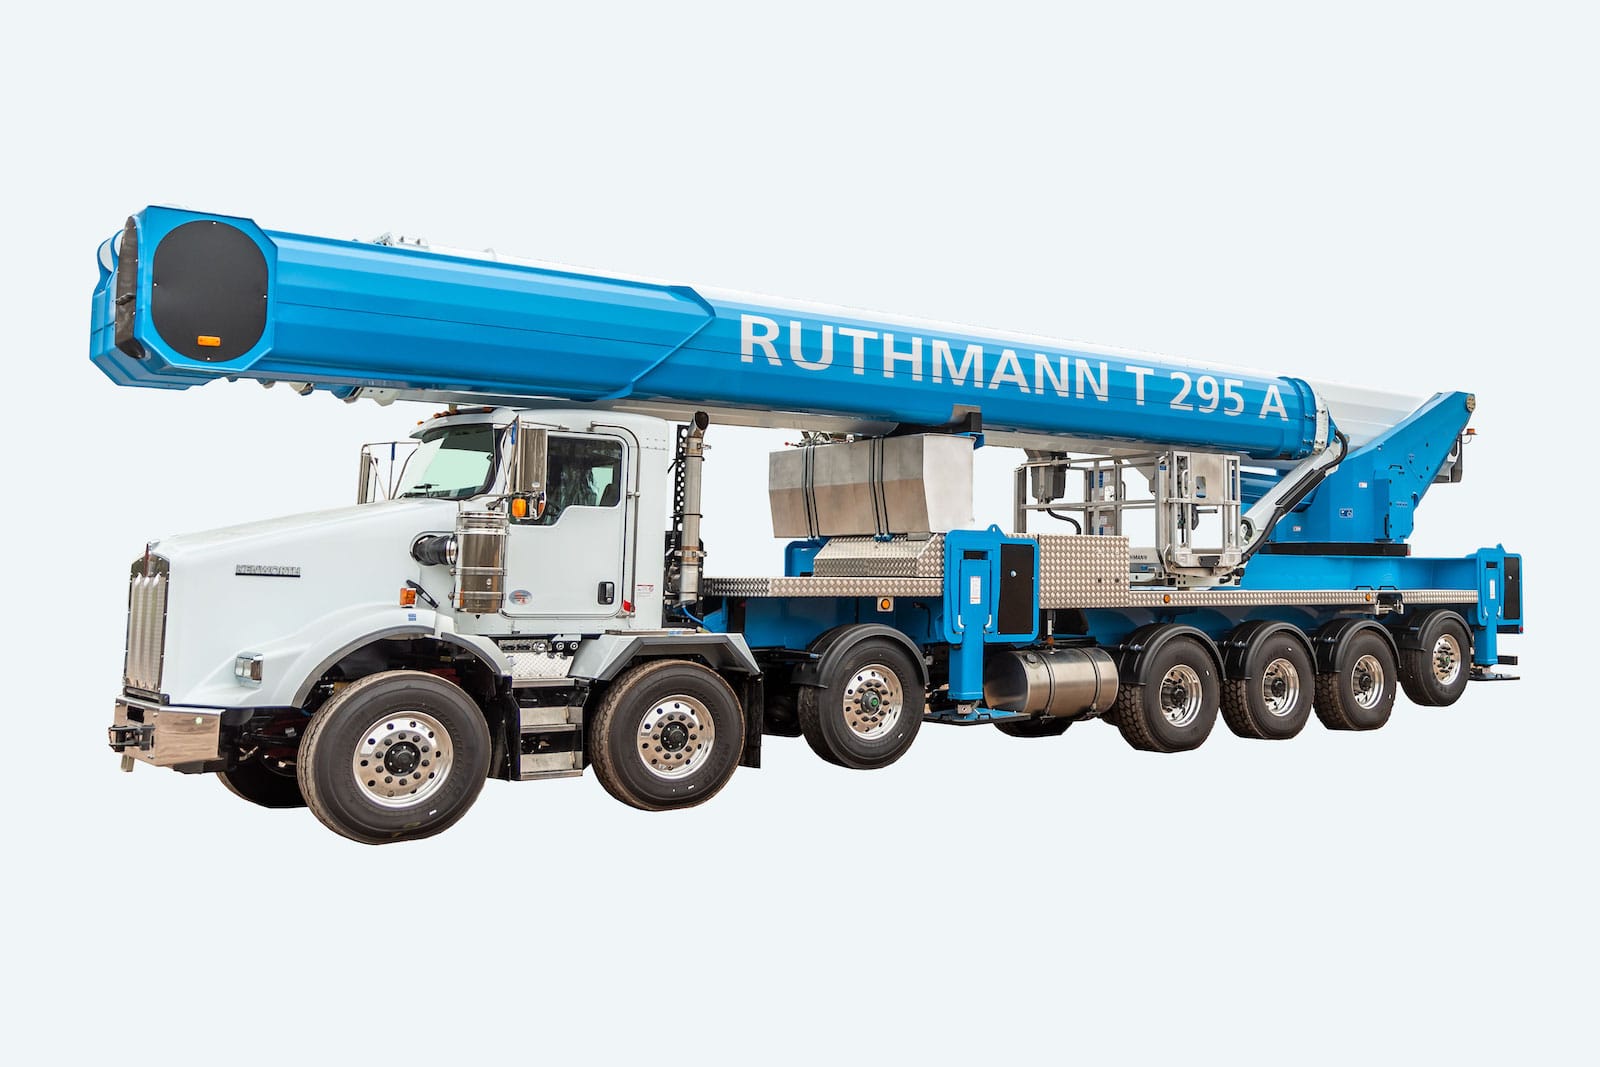 RUTHMANN T 295 A